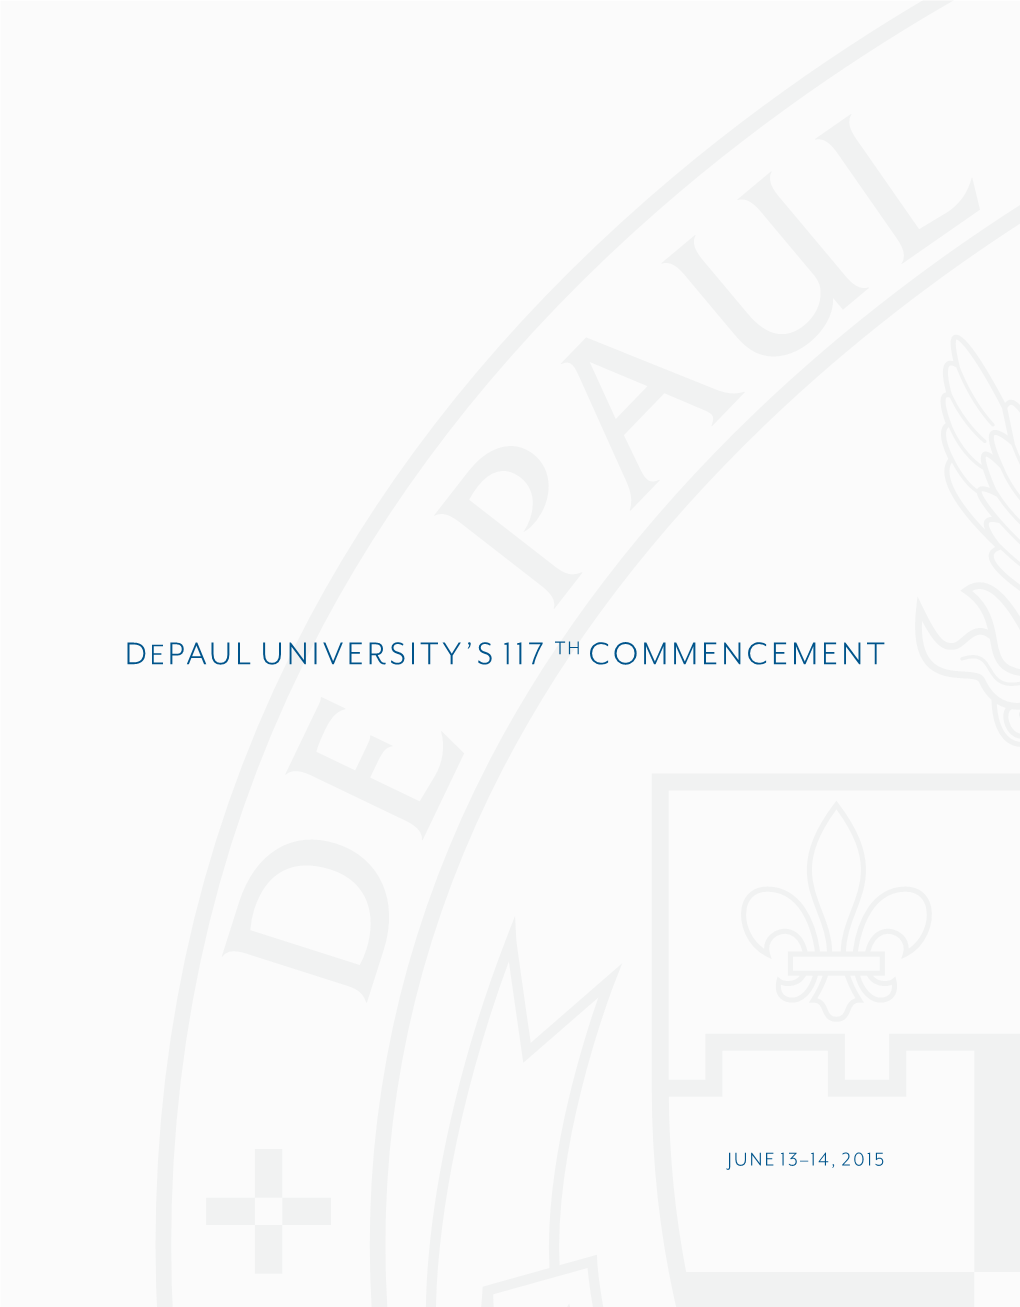 Depaul University's Th Commencement